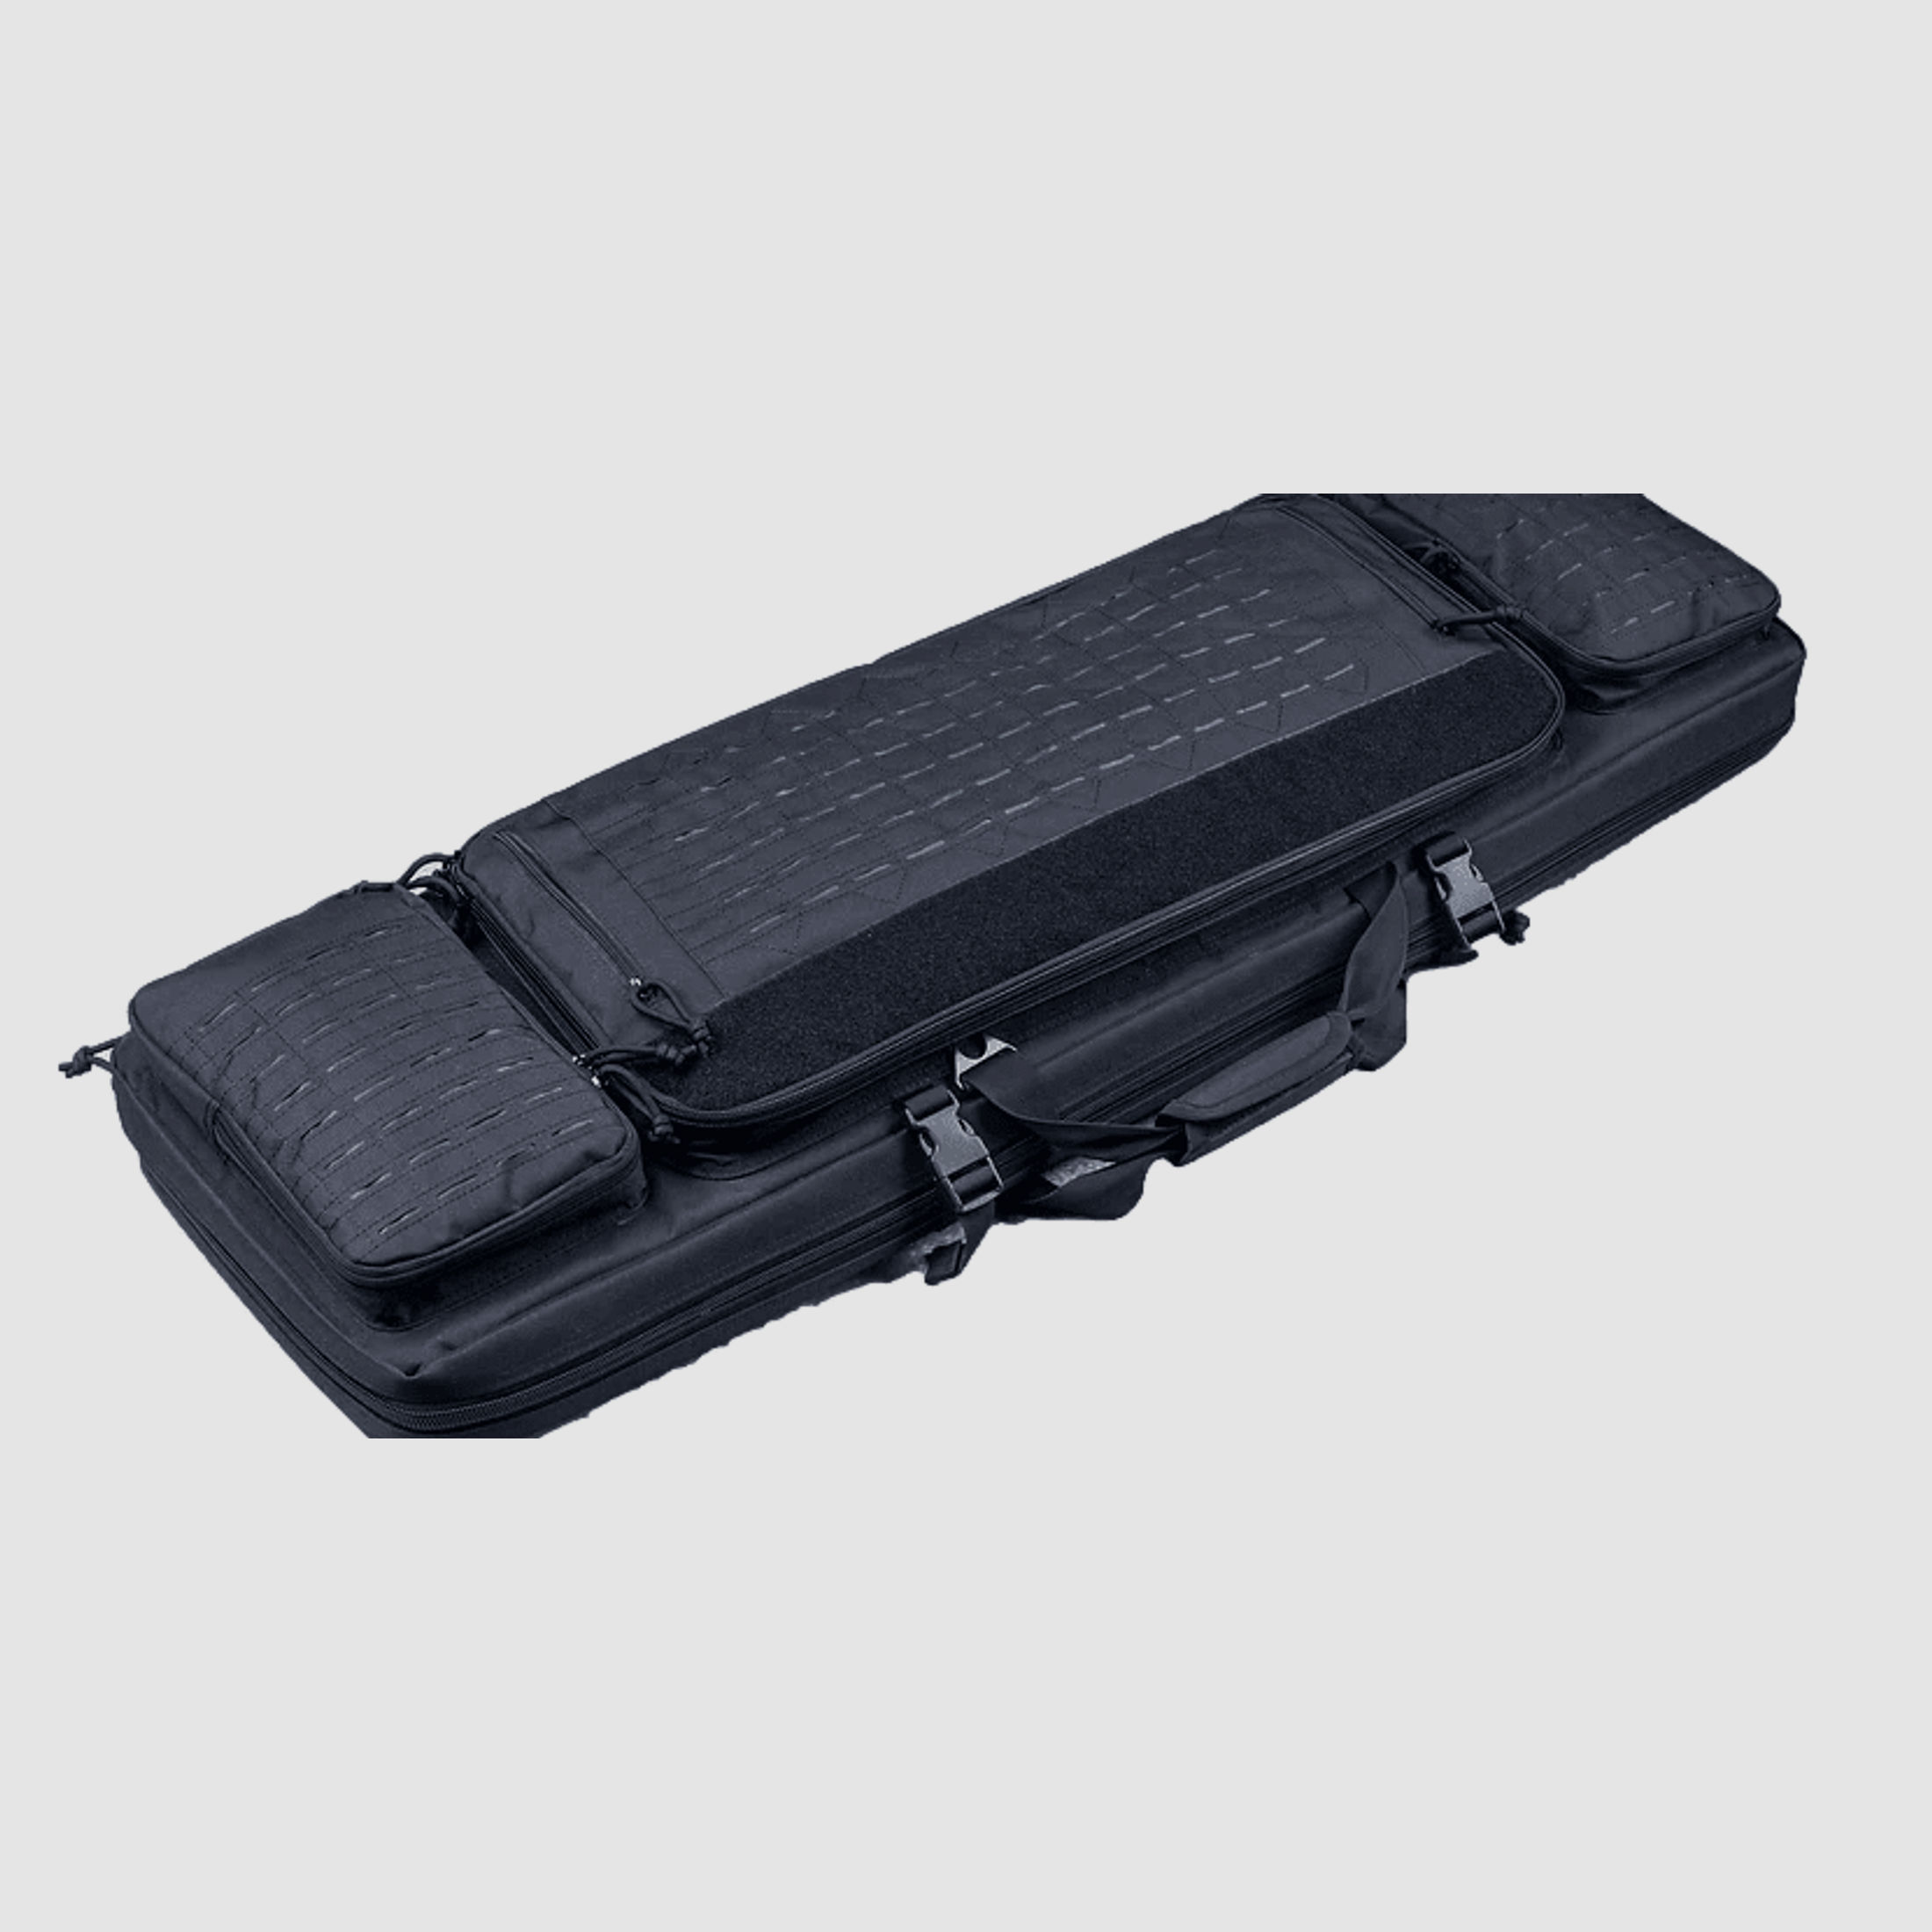 Hera Arms Rifle Bag